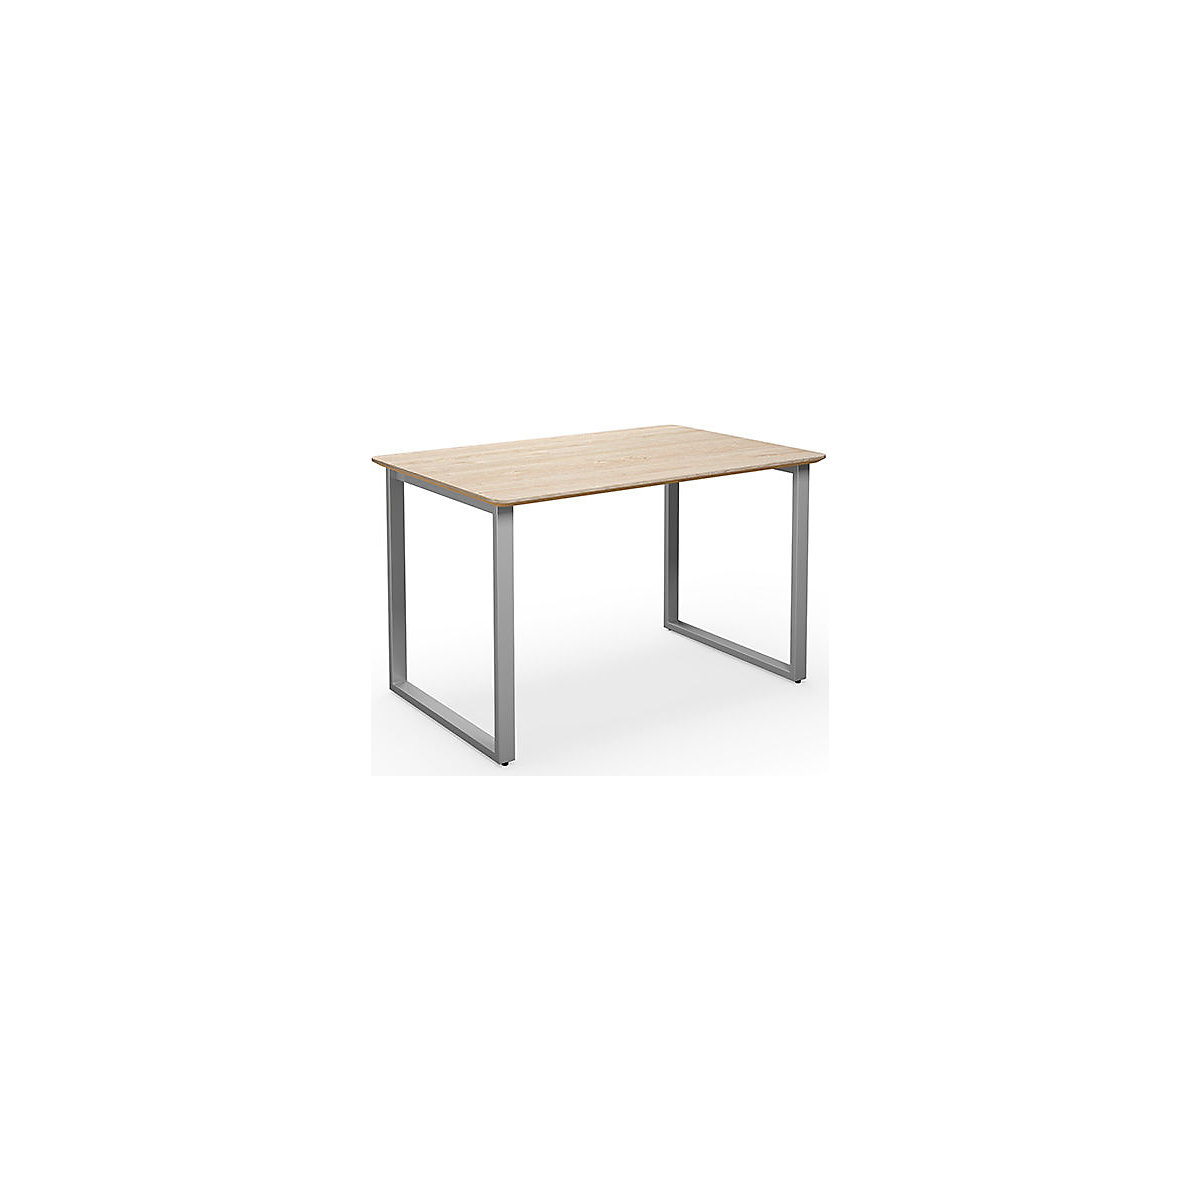 DUO-O Trend multi-purpose desk, straight tabletop, rounded corners, WxD 1200 x 800 mm, oak, silver-4